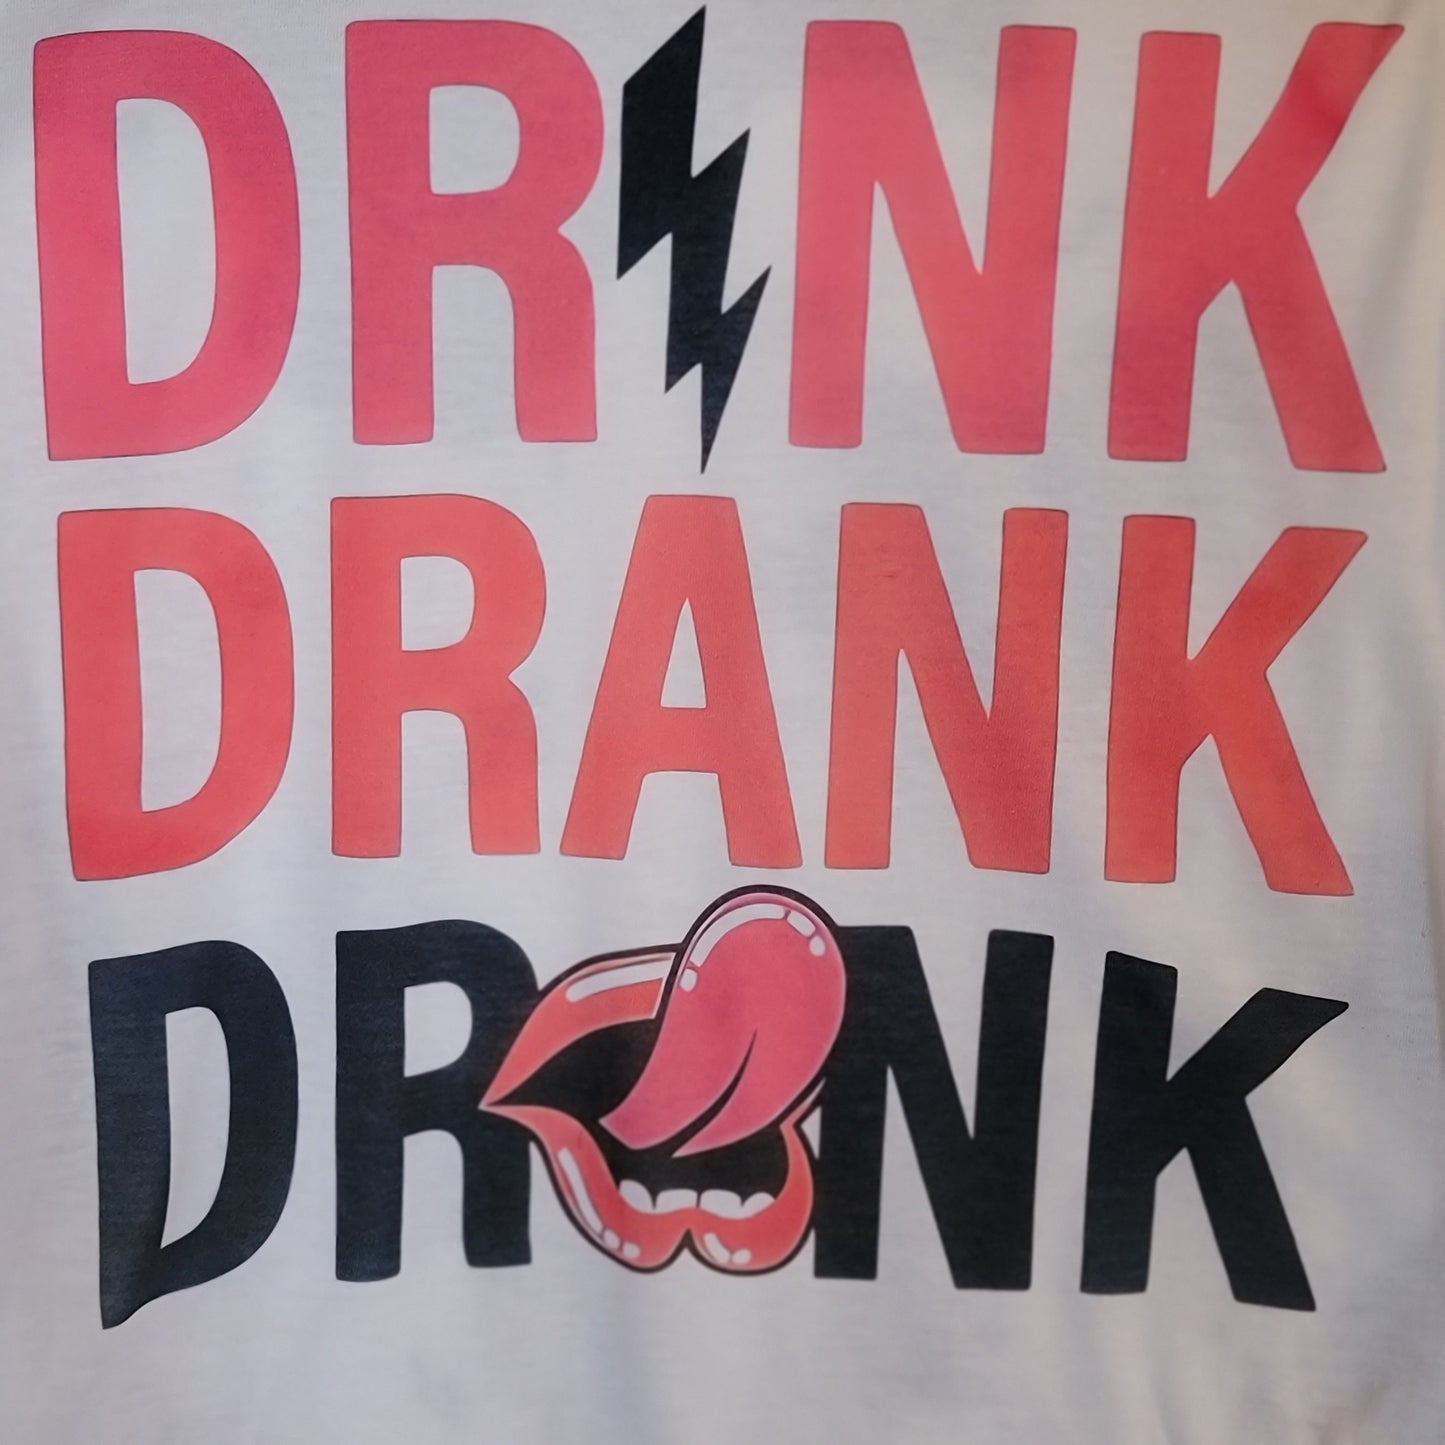 Drink Drank Drunk Western White T-Shirt Graphic Tee